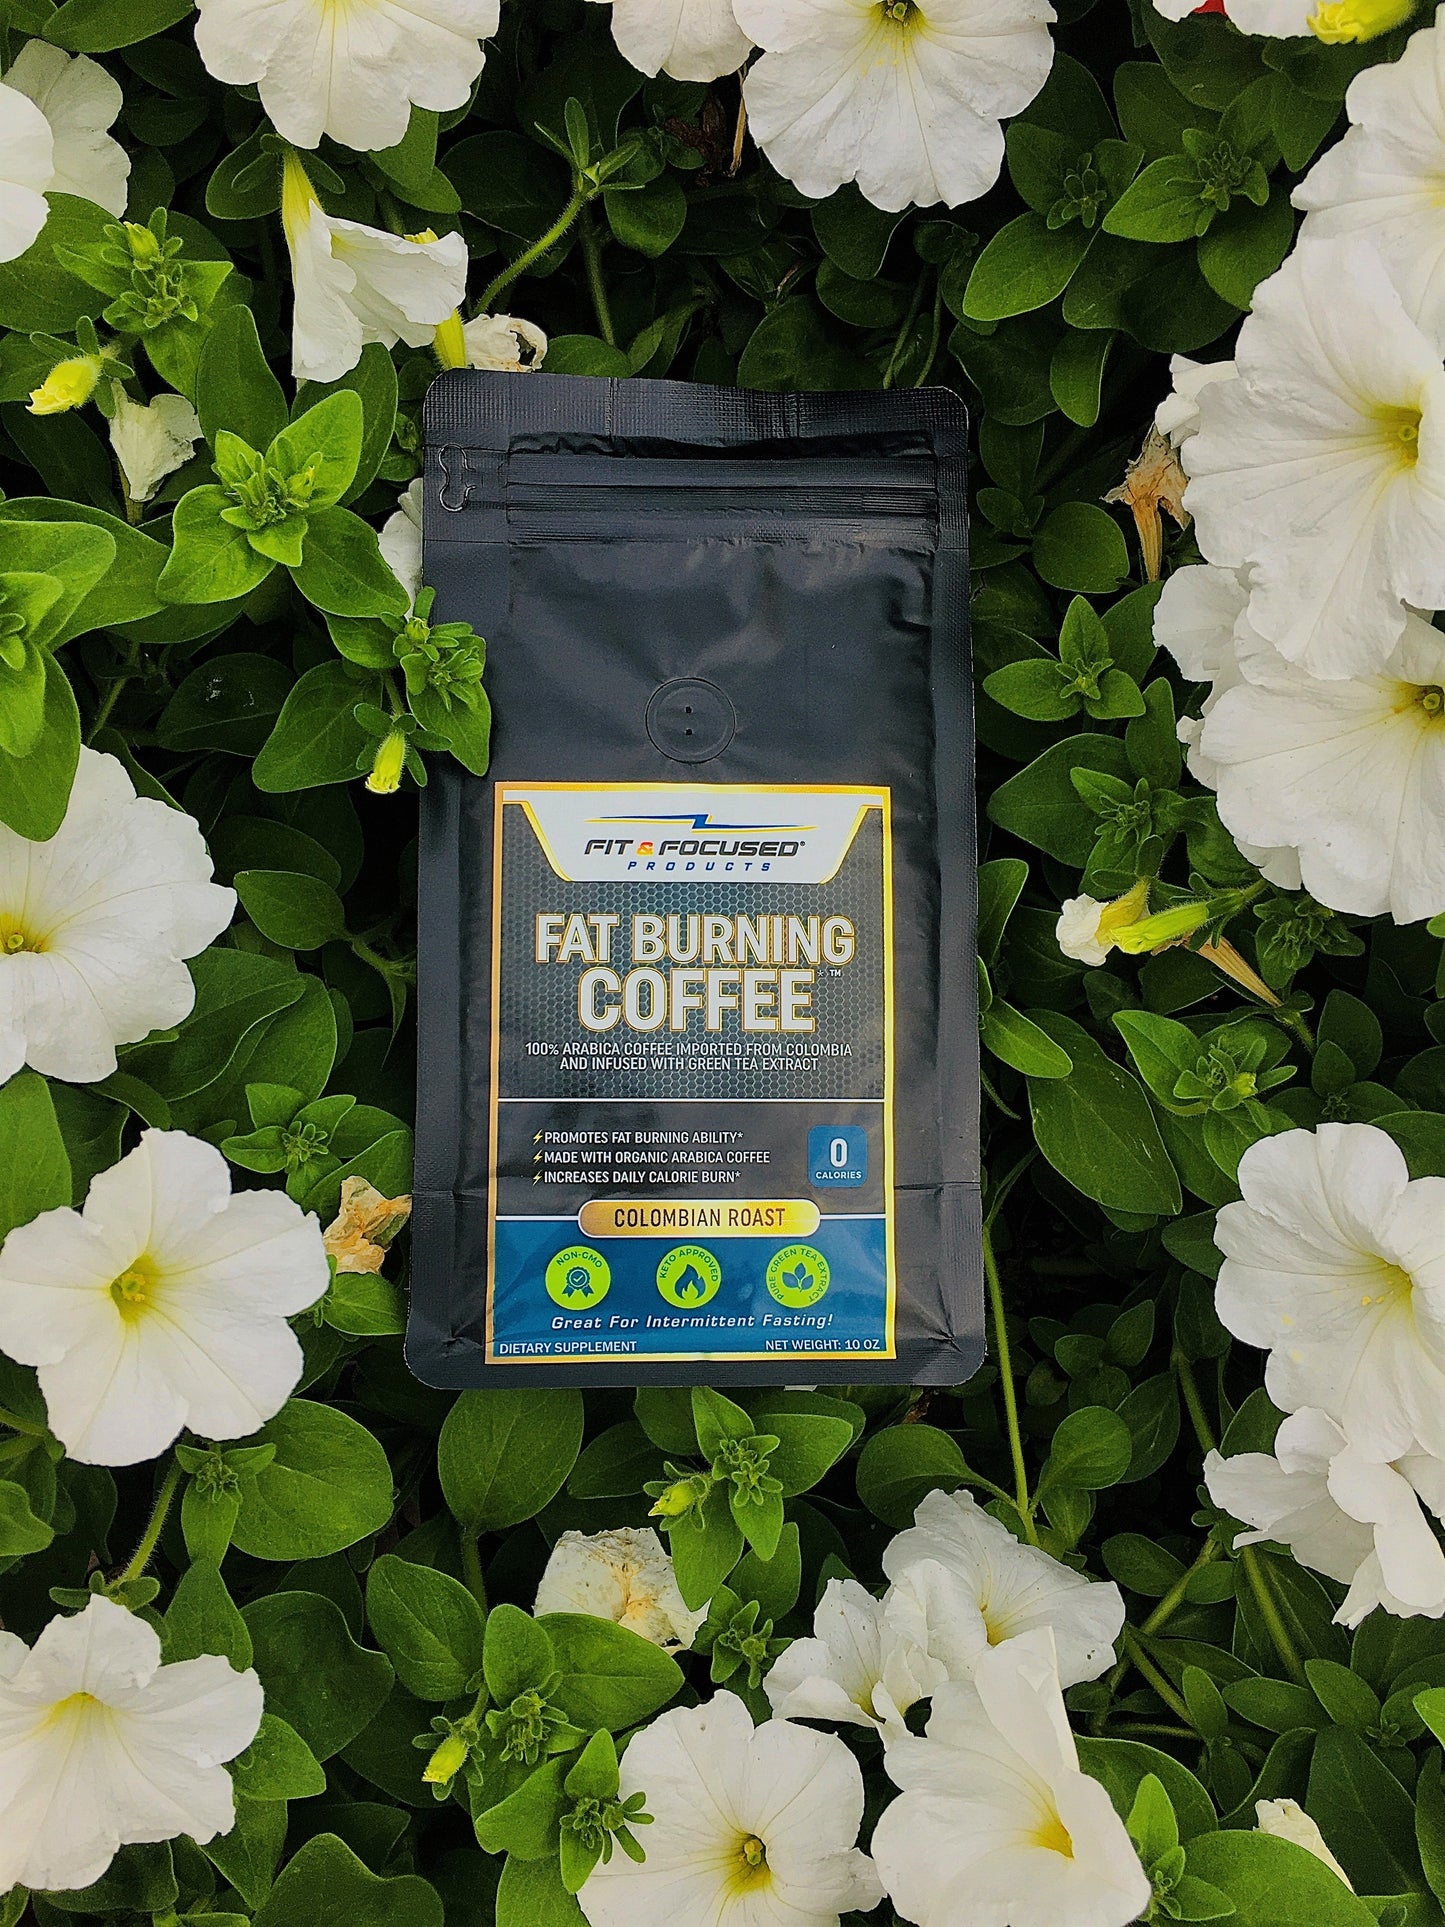 Fat Burning Coffee - Organic Colombian Roast, 10 oz. Ground